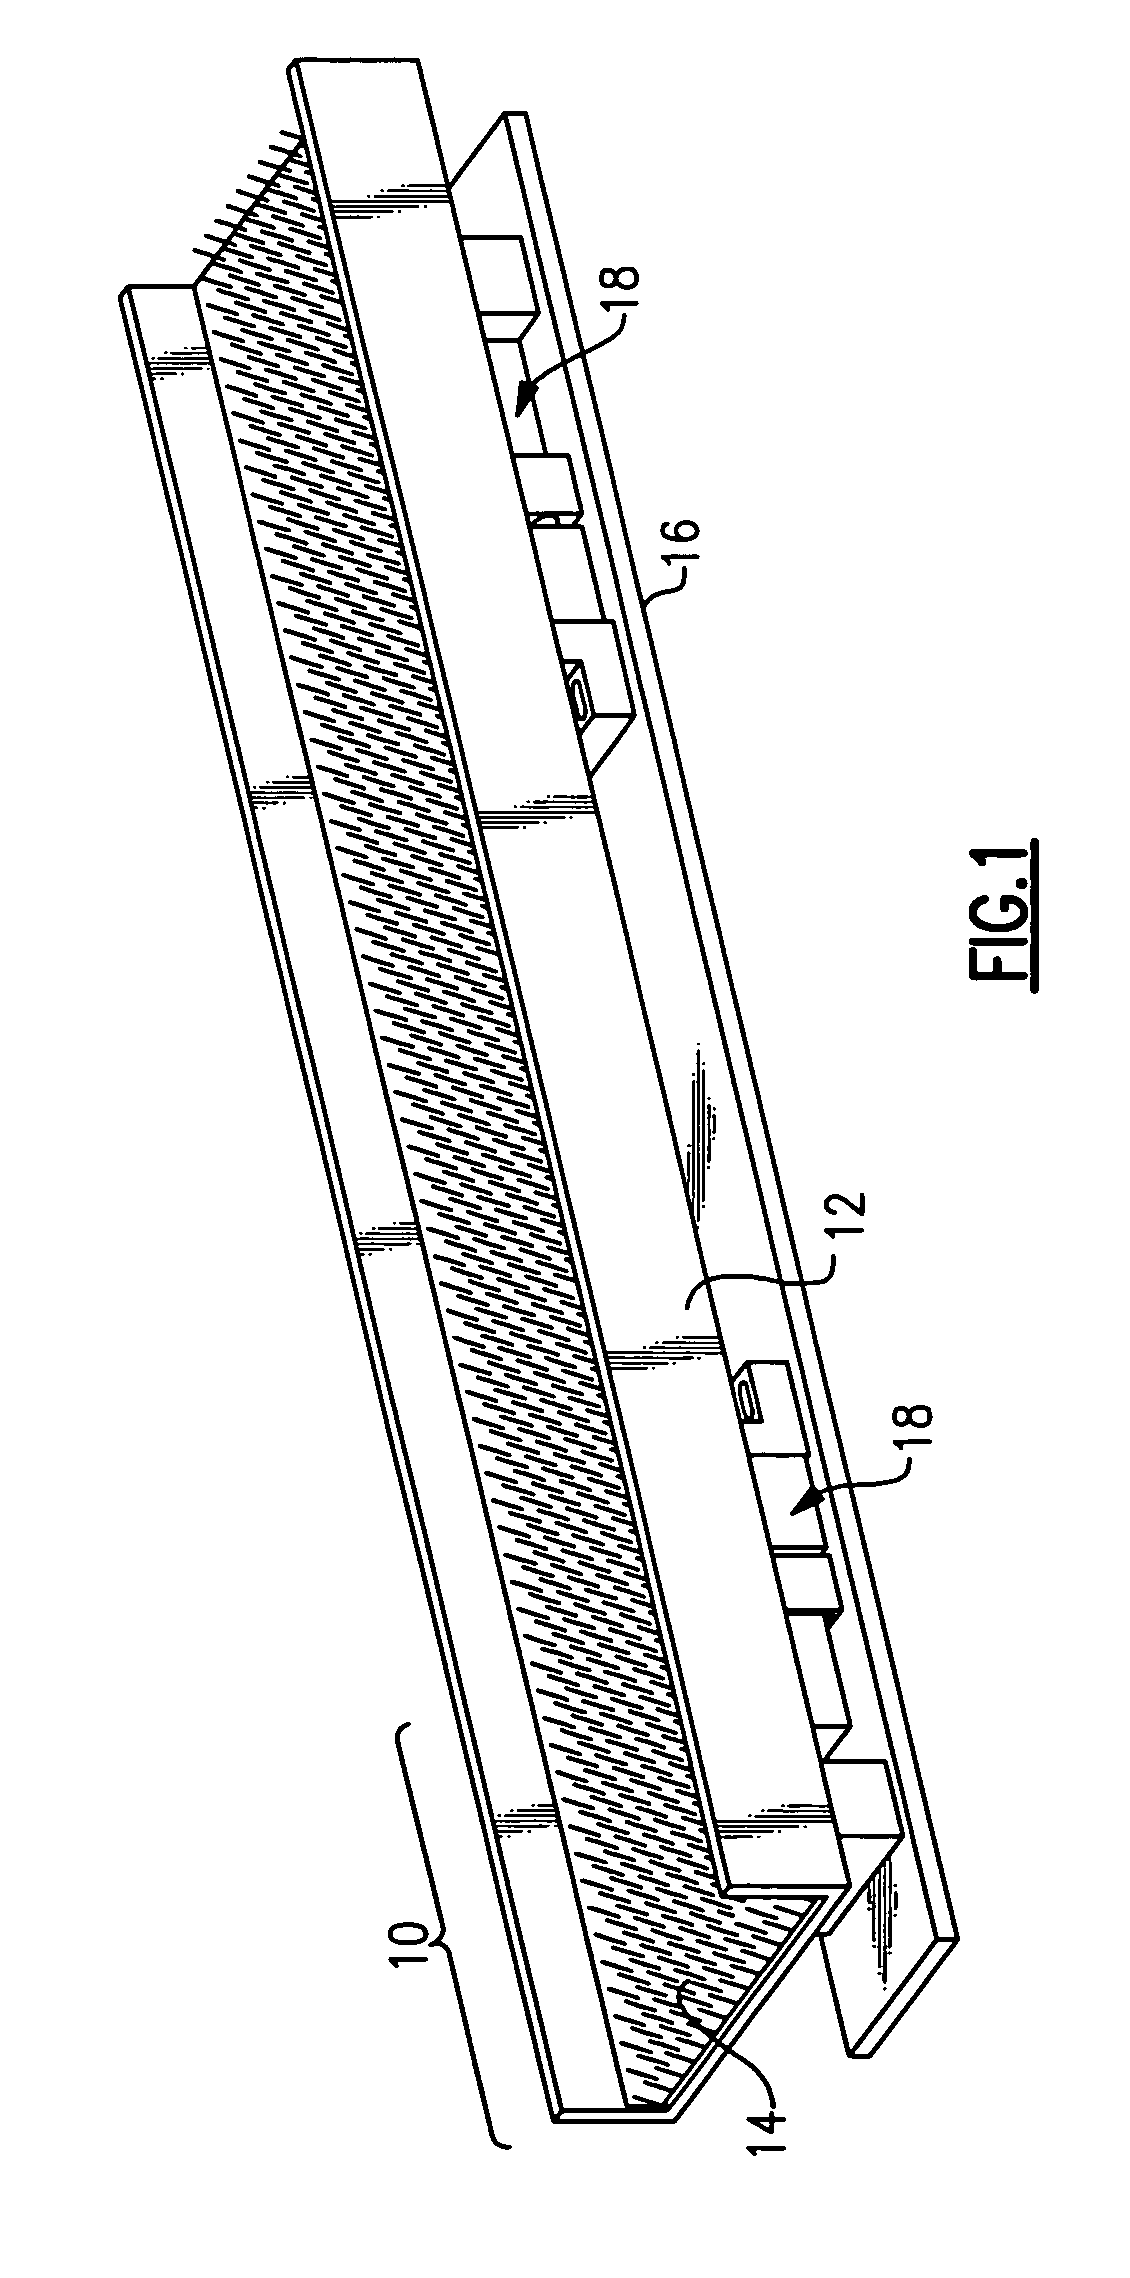 Vibratory conveyor with non-biased oscillation